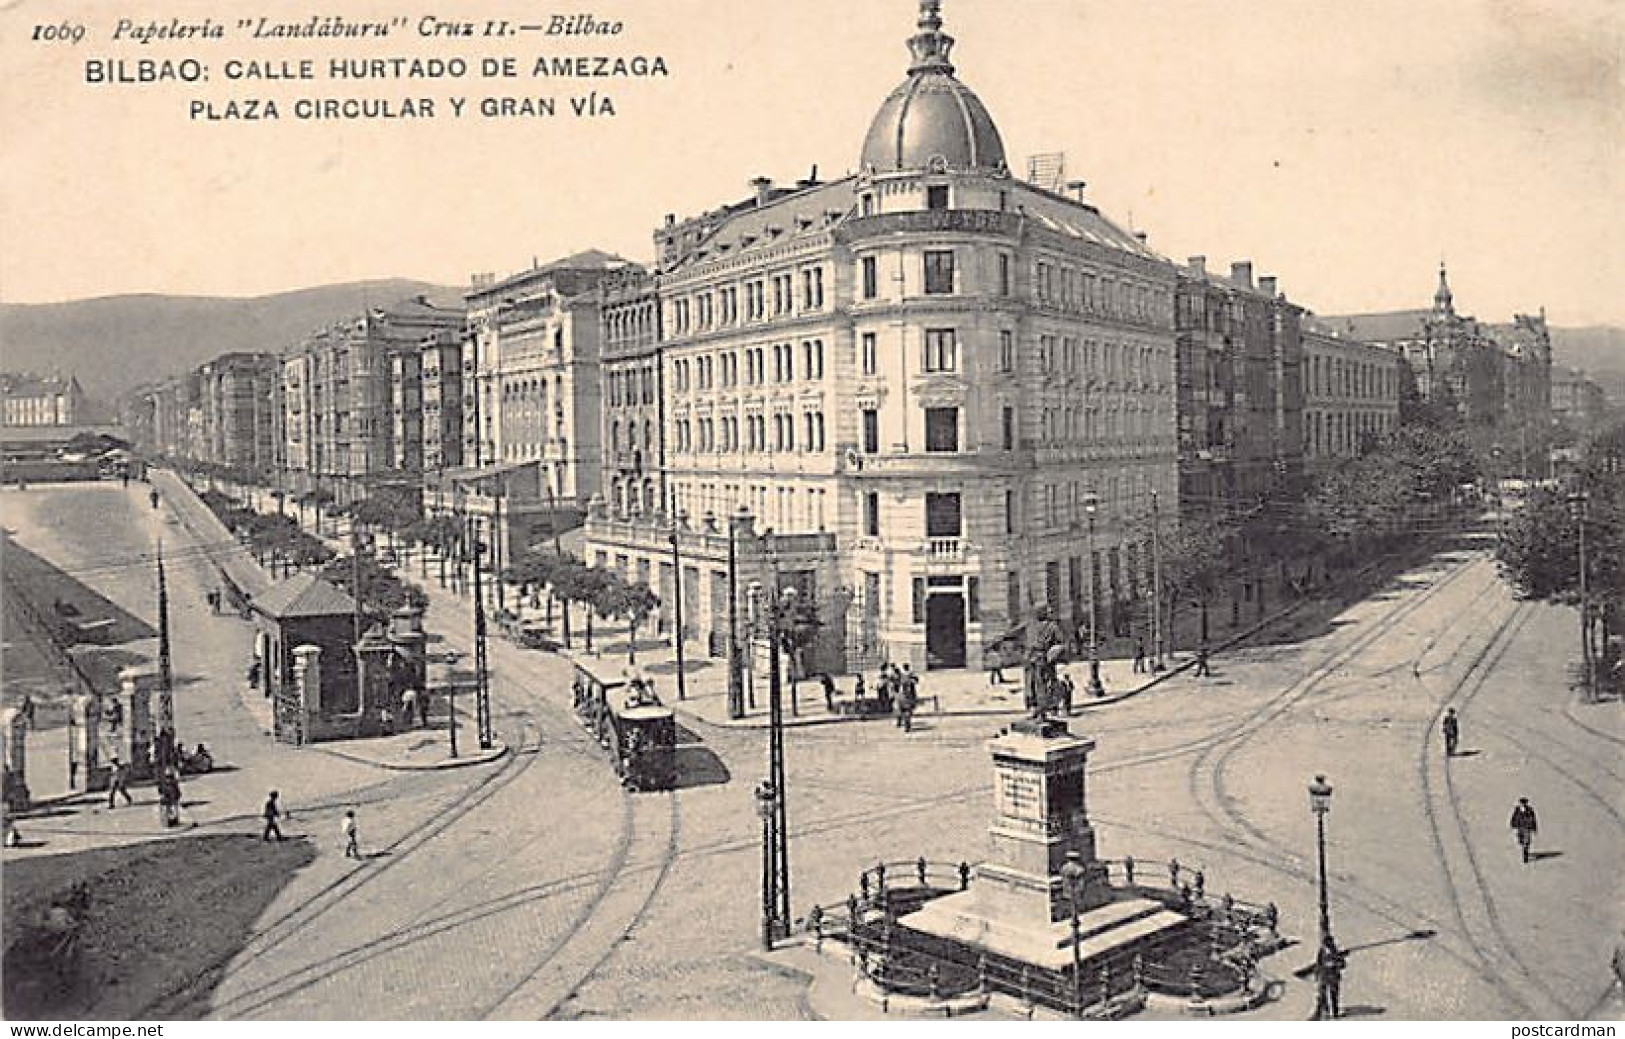 BILBAO (P. Vasco) Calle Hurtado De Amezaga - Plaza Circular Y Gran Via - Ed. Landaburu 1069 - Vizcaya (Bilbao)